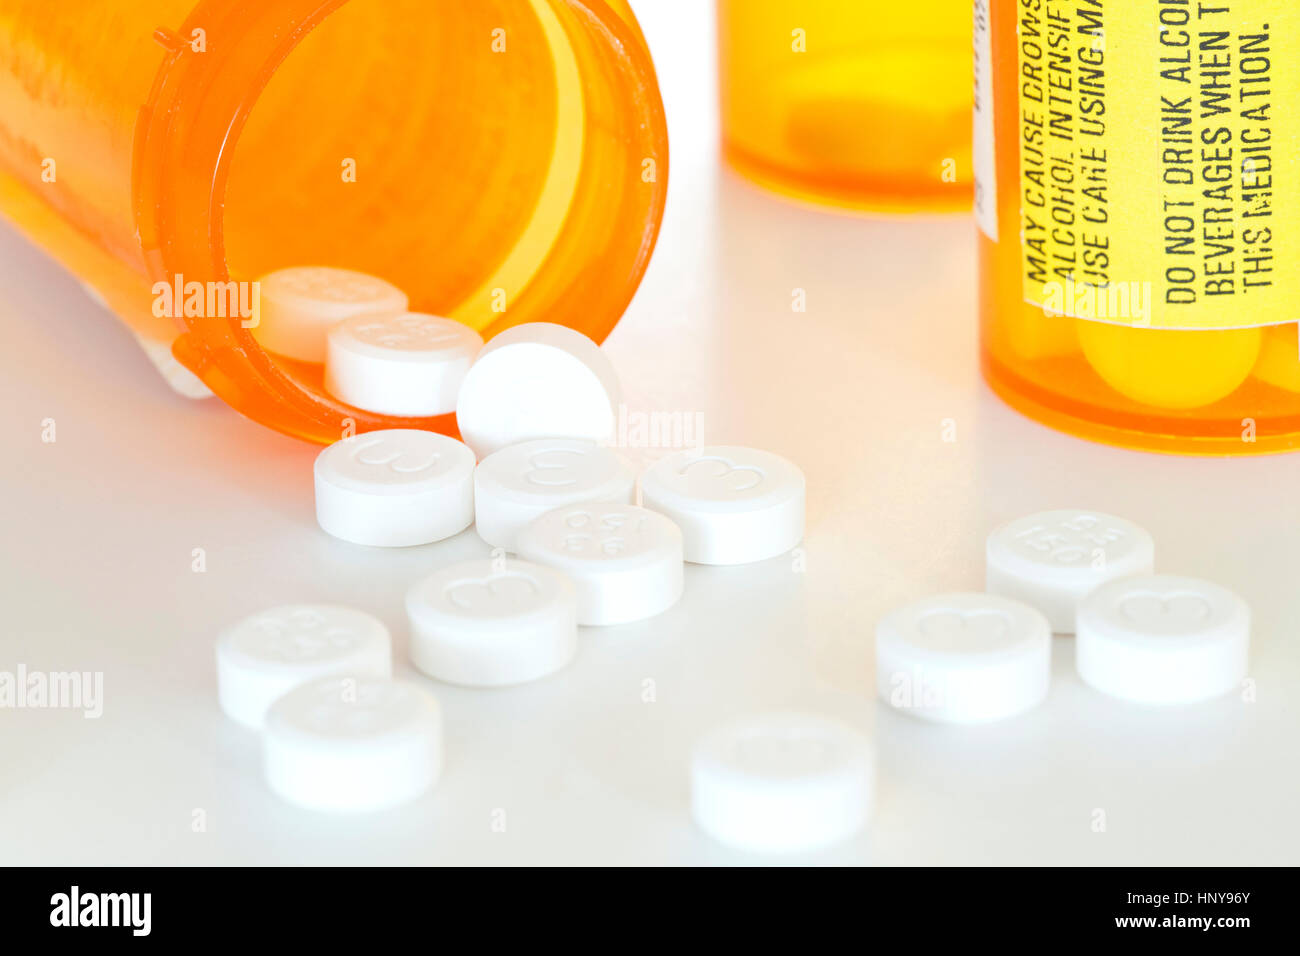 Prescription drugs, pills, opioids, bottles - USA Stock Photo